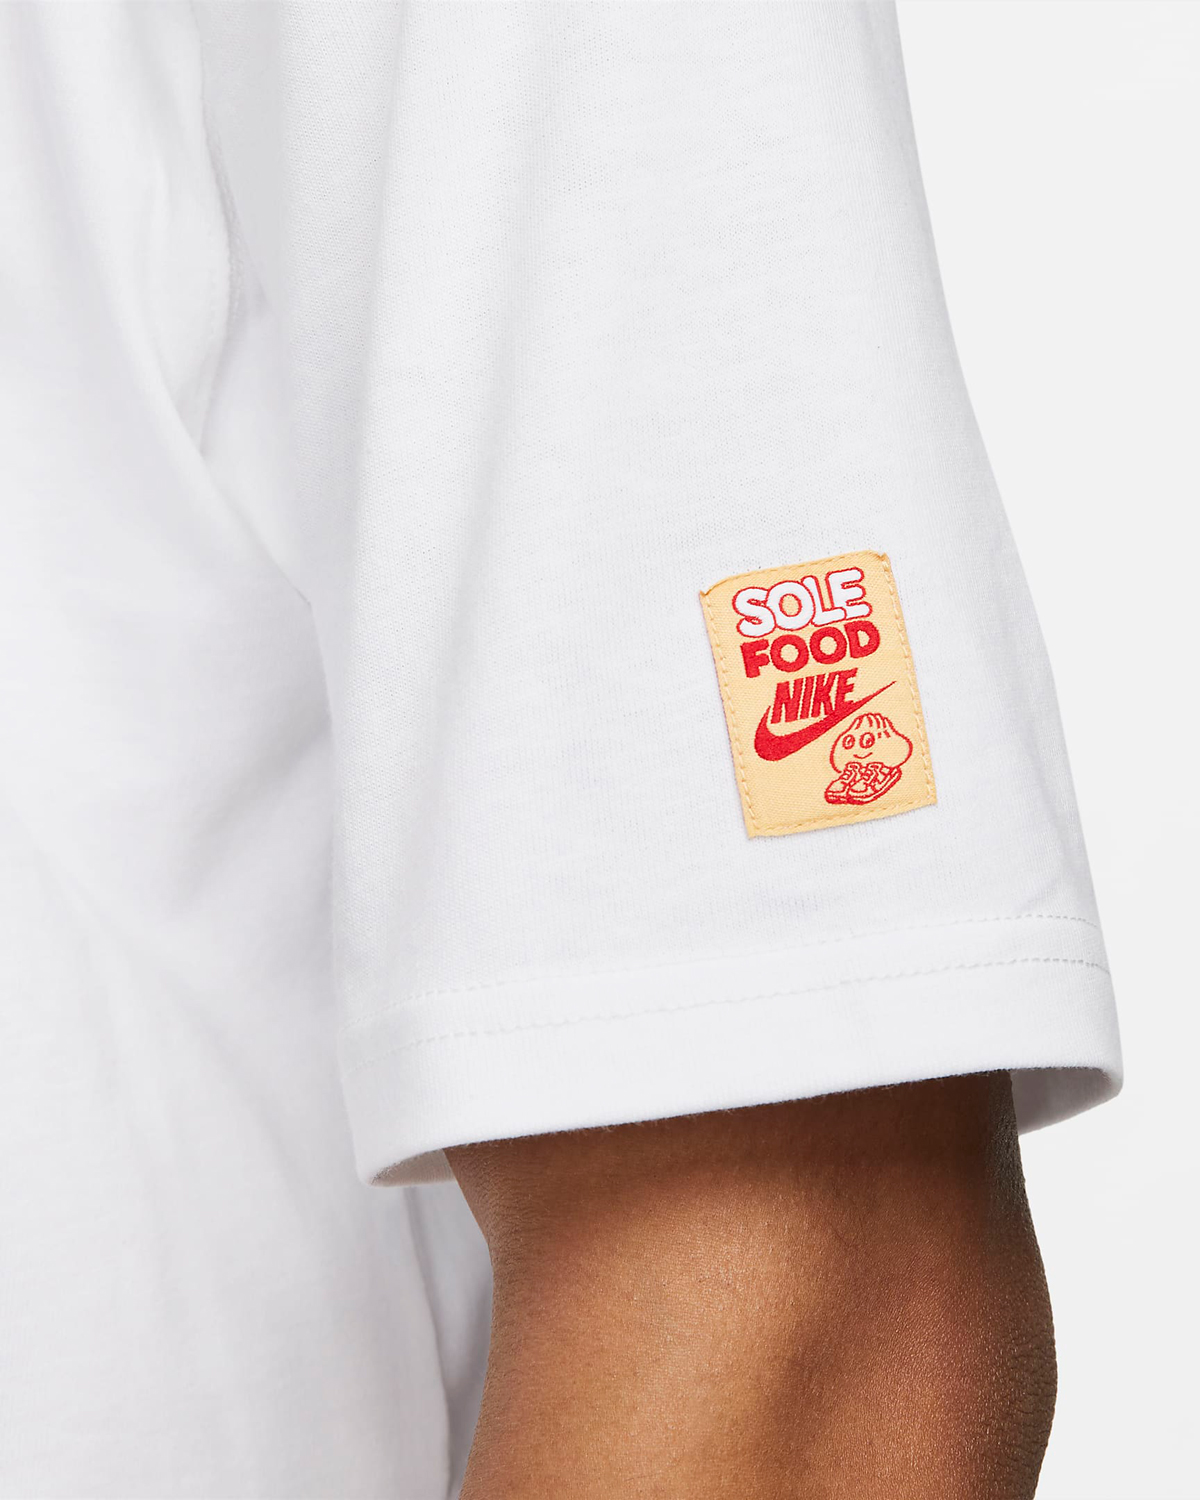 Nike-Sportswear-Sole-Food-T-Shirt-White-Red-2